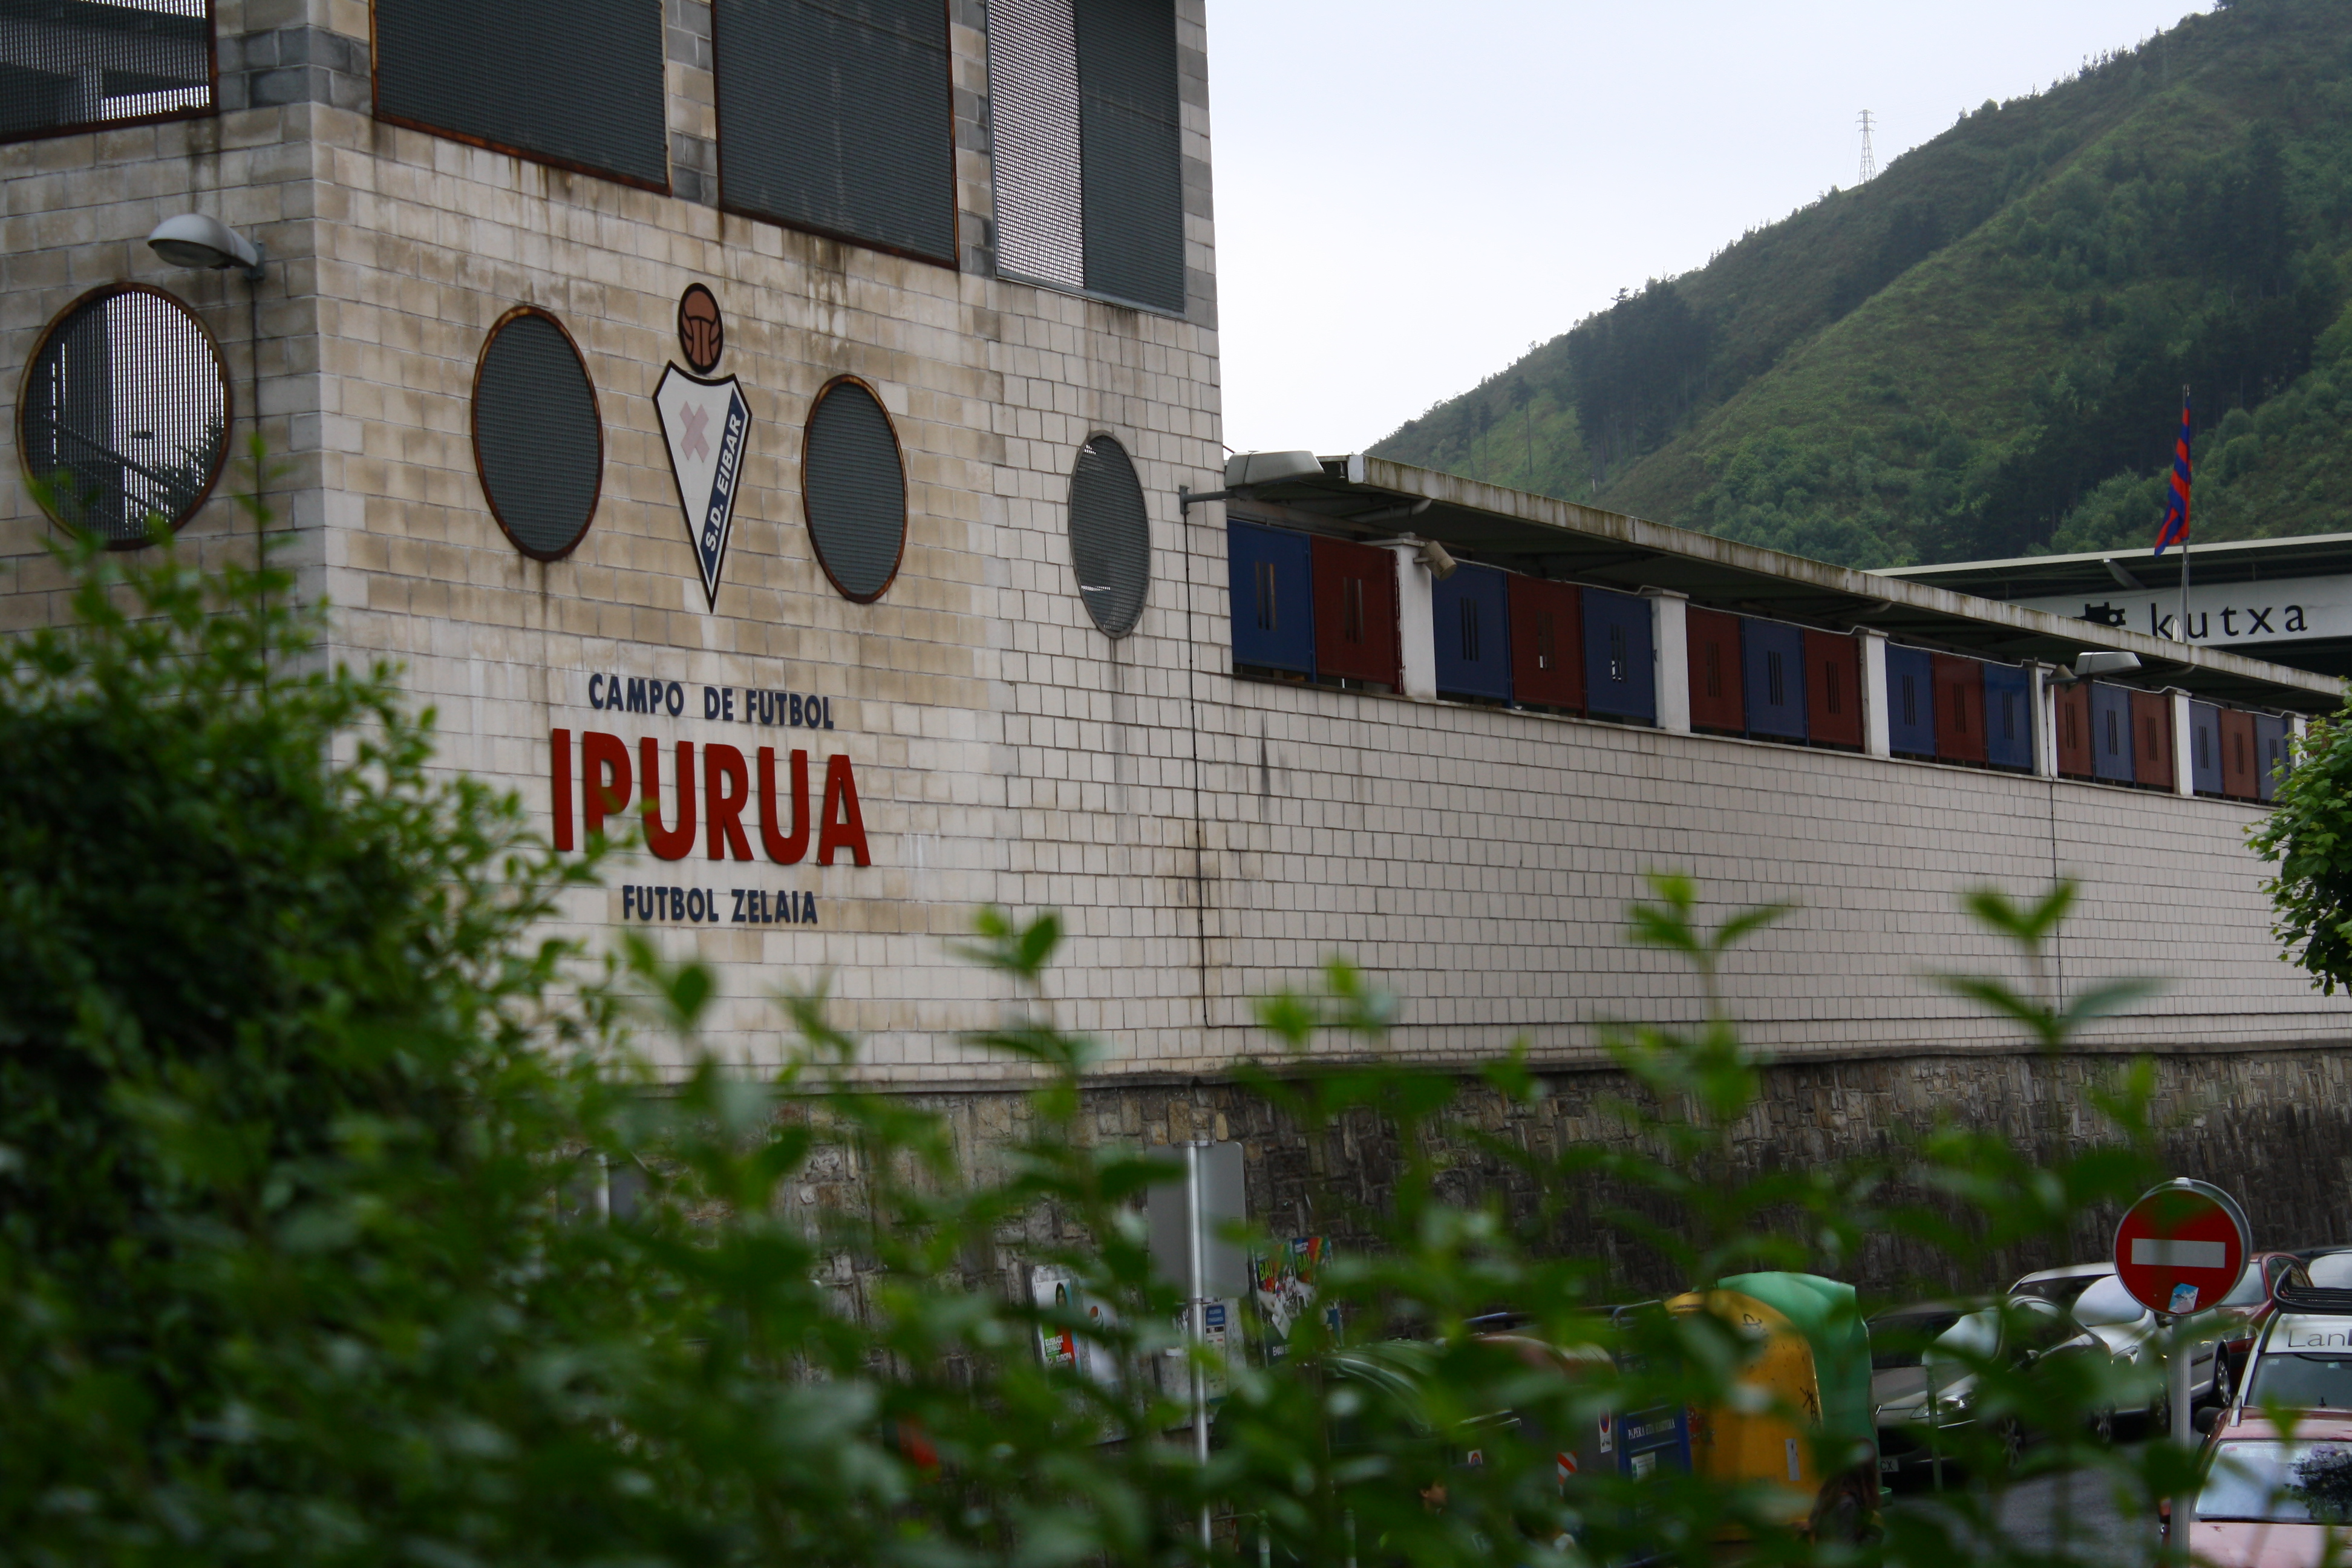 Campo de fútbol del Eibar, Ipurua